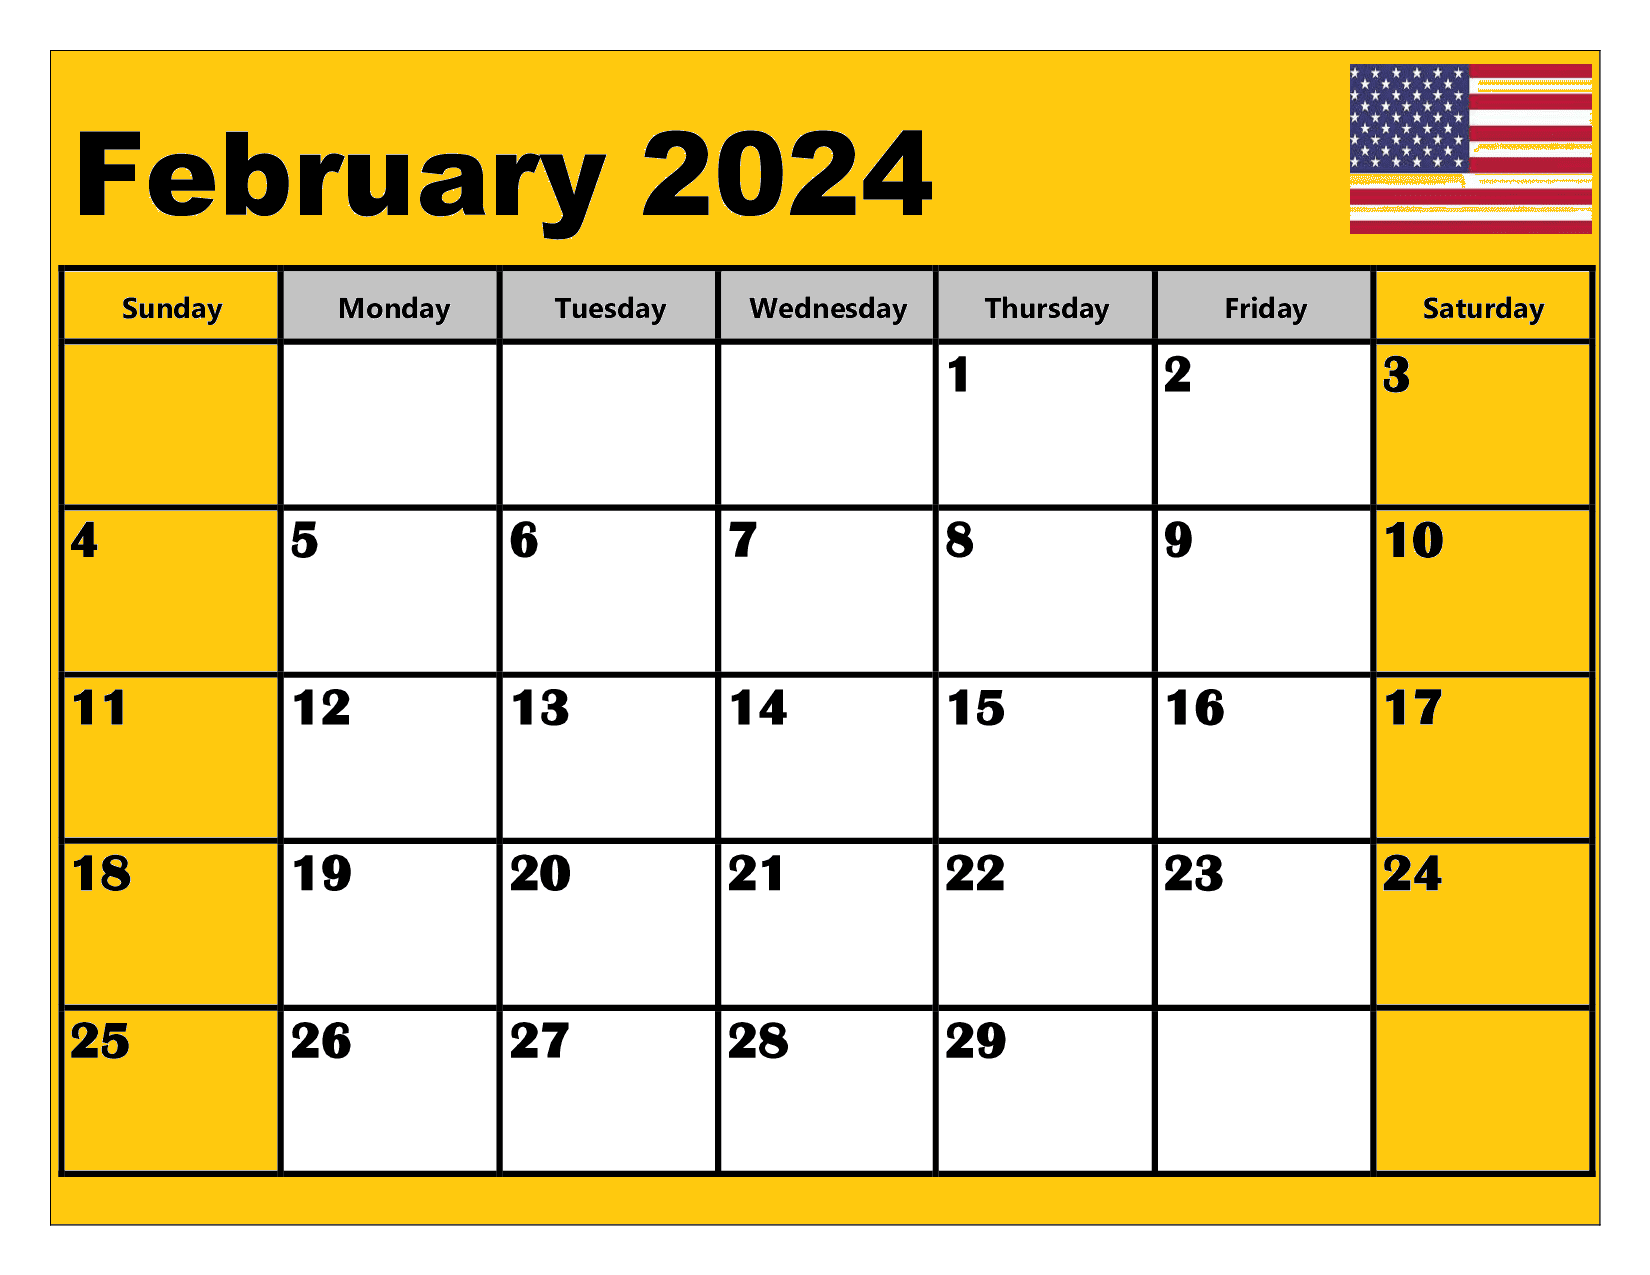 February 2024 Calendar with USA Holidays